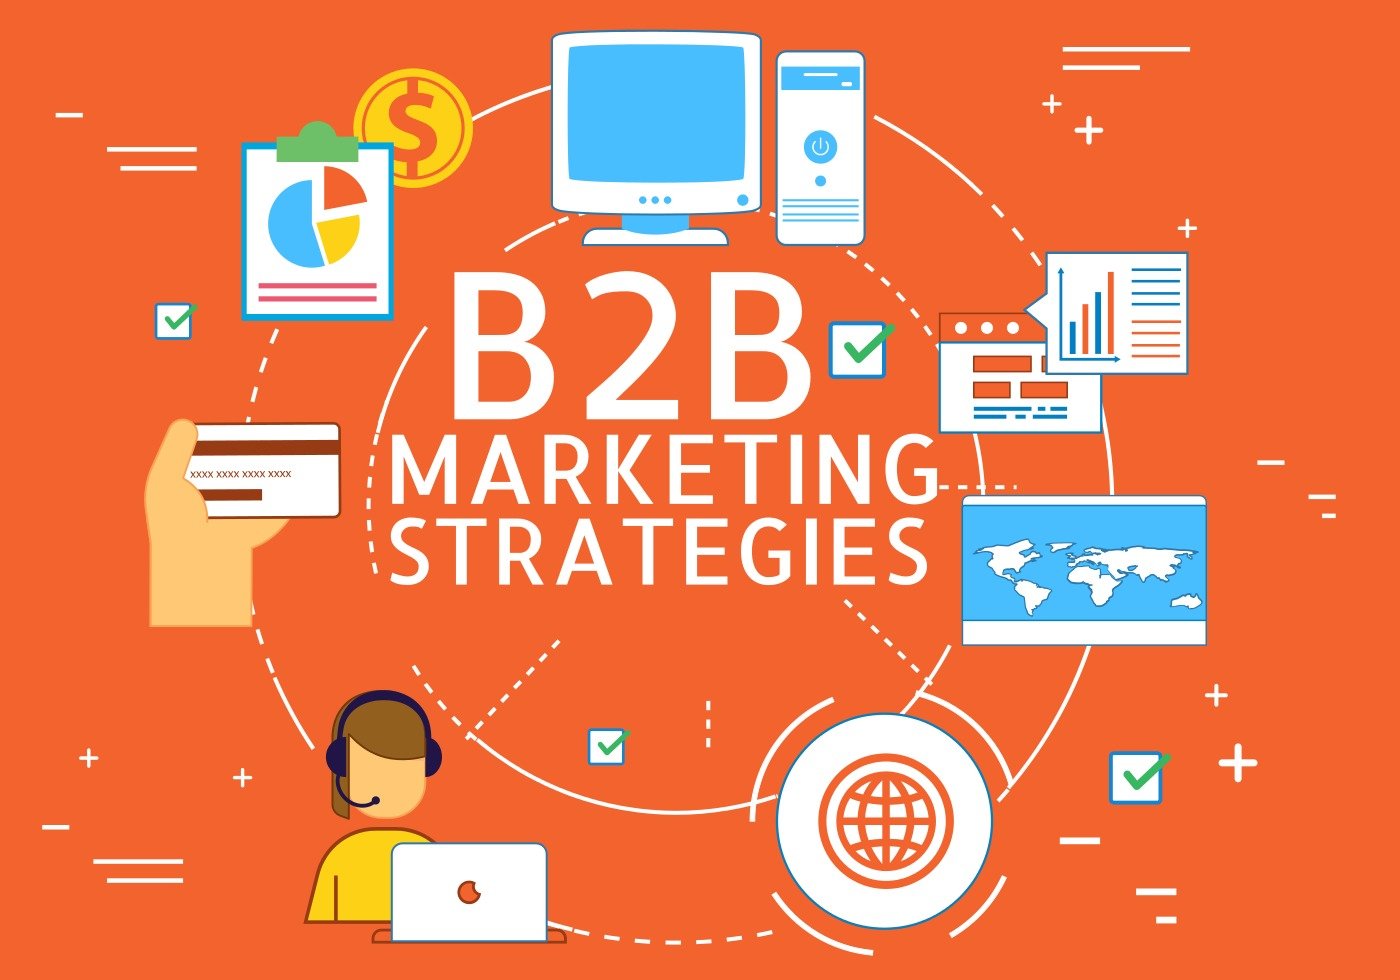 5 Things To Make B2B Marketing Successful